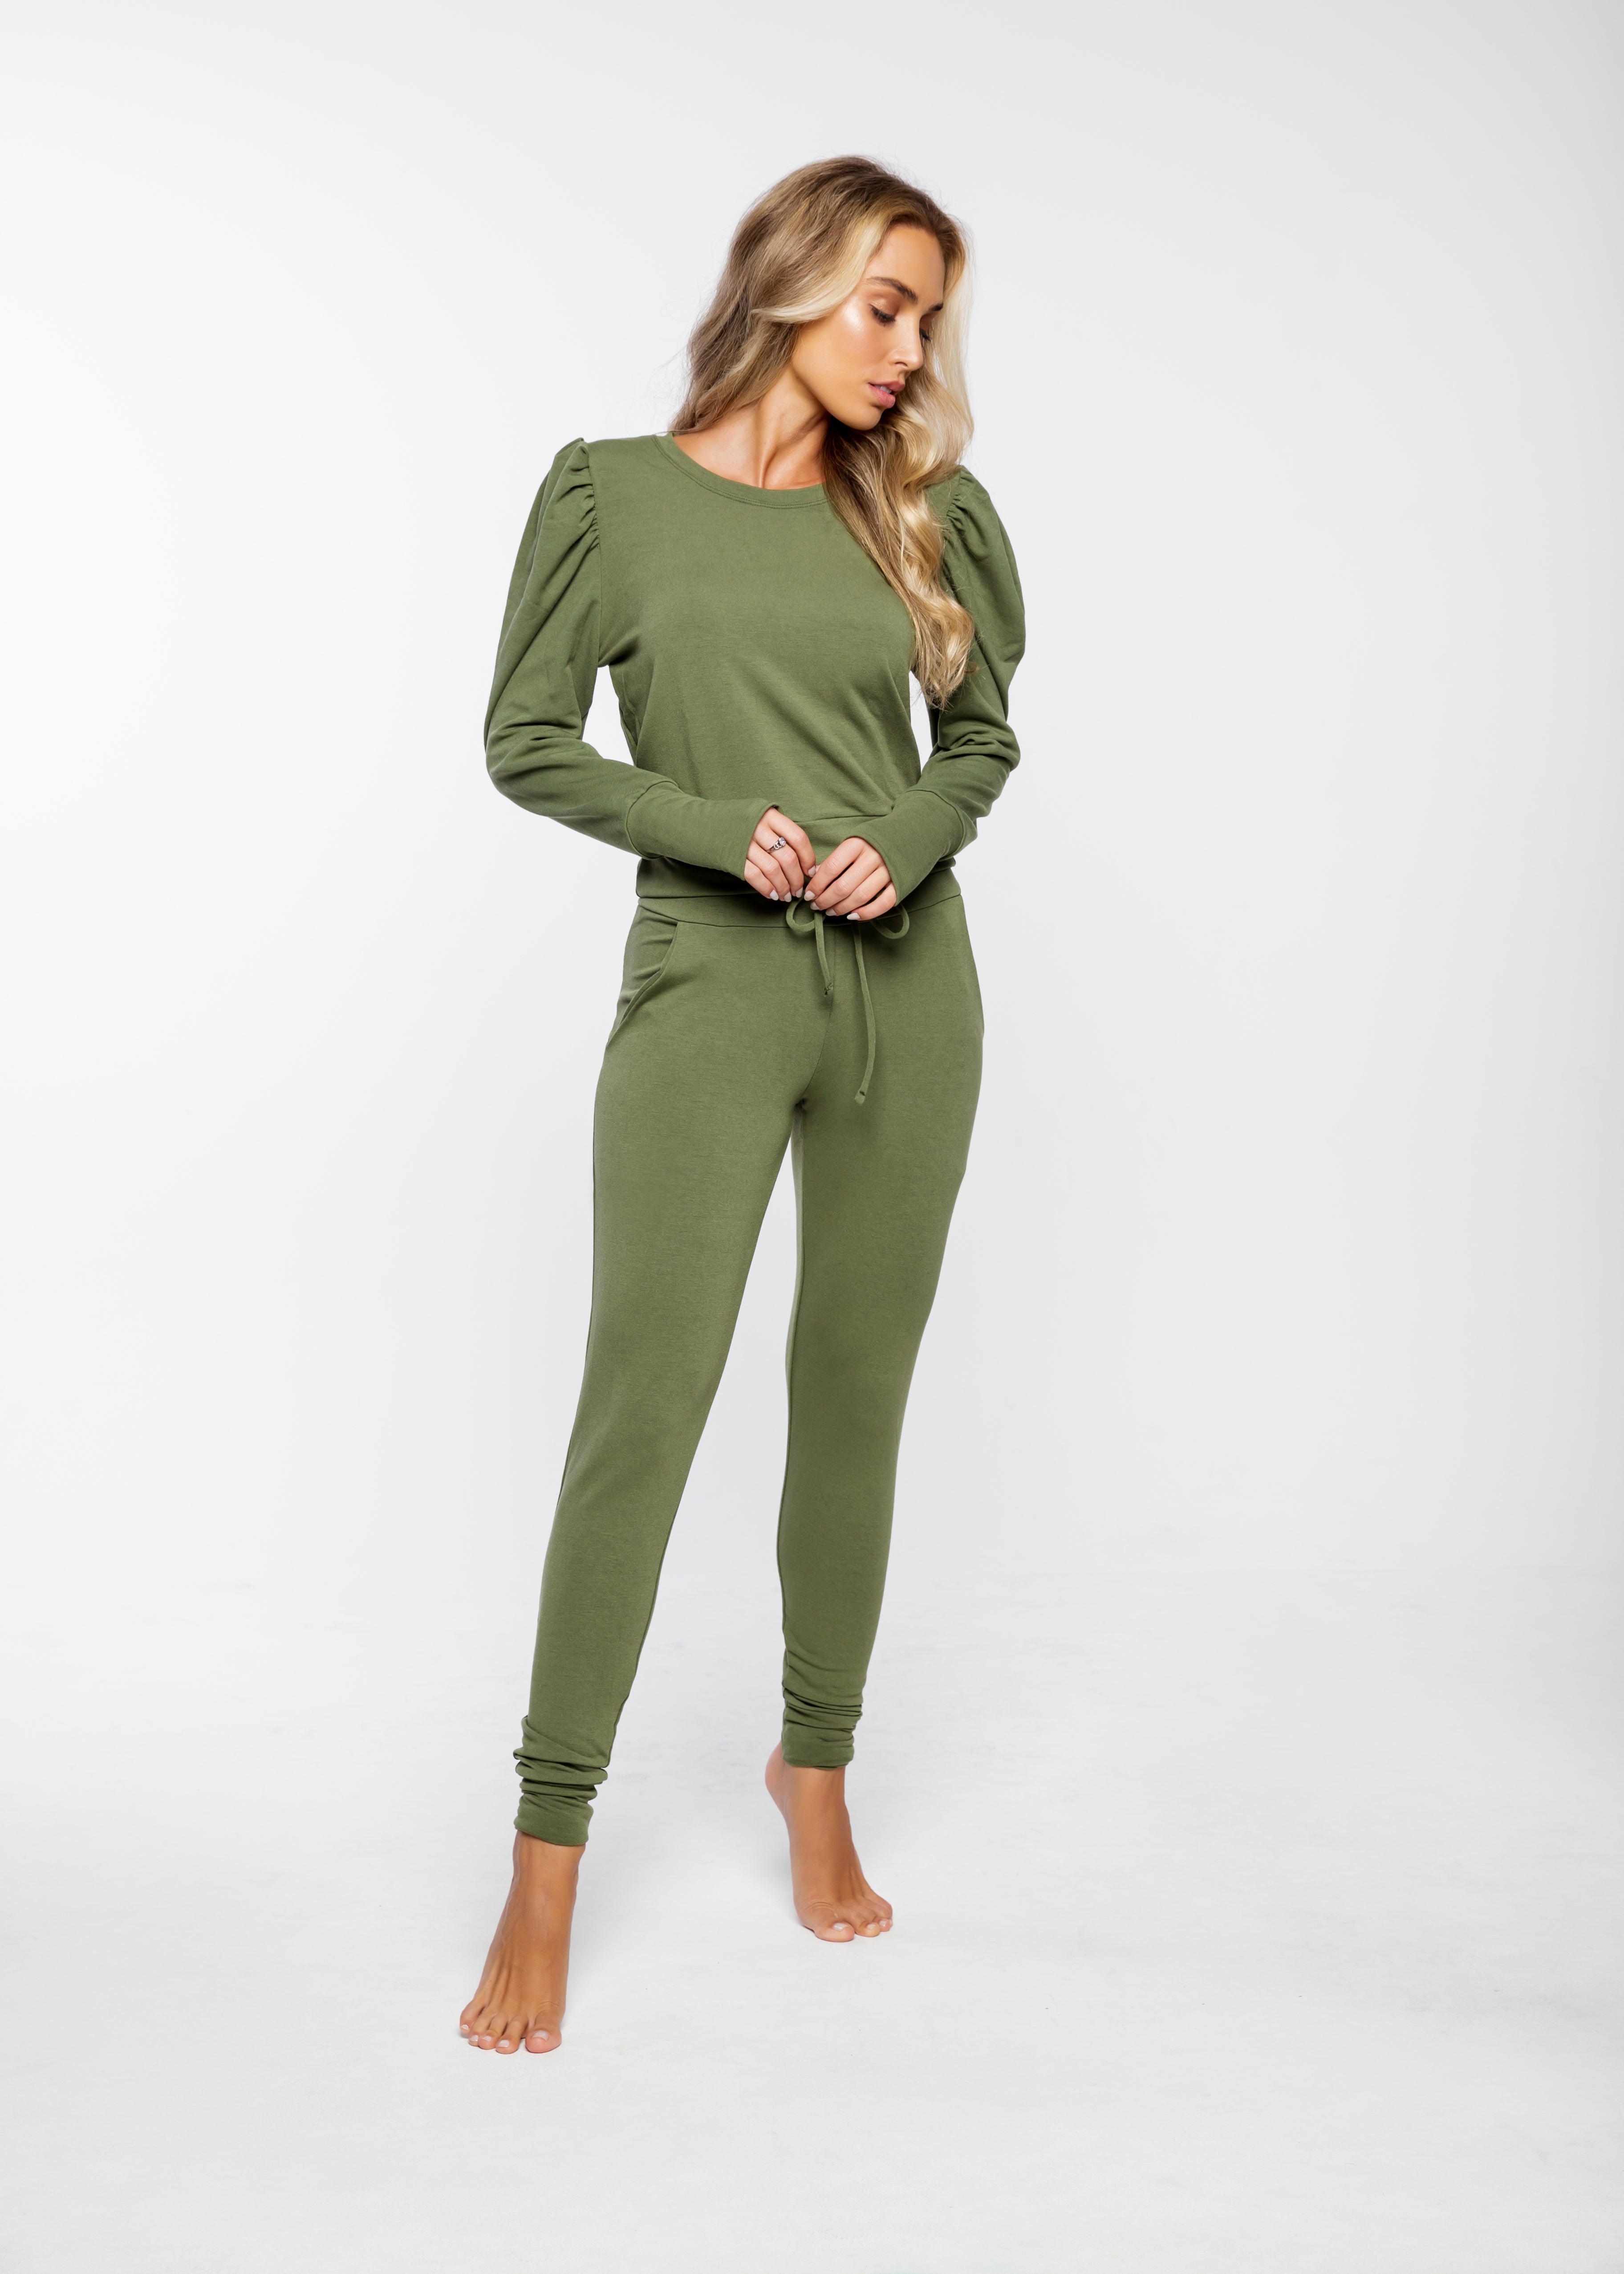 militar green sweatpants, women sweatpants, female model